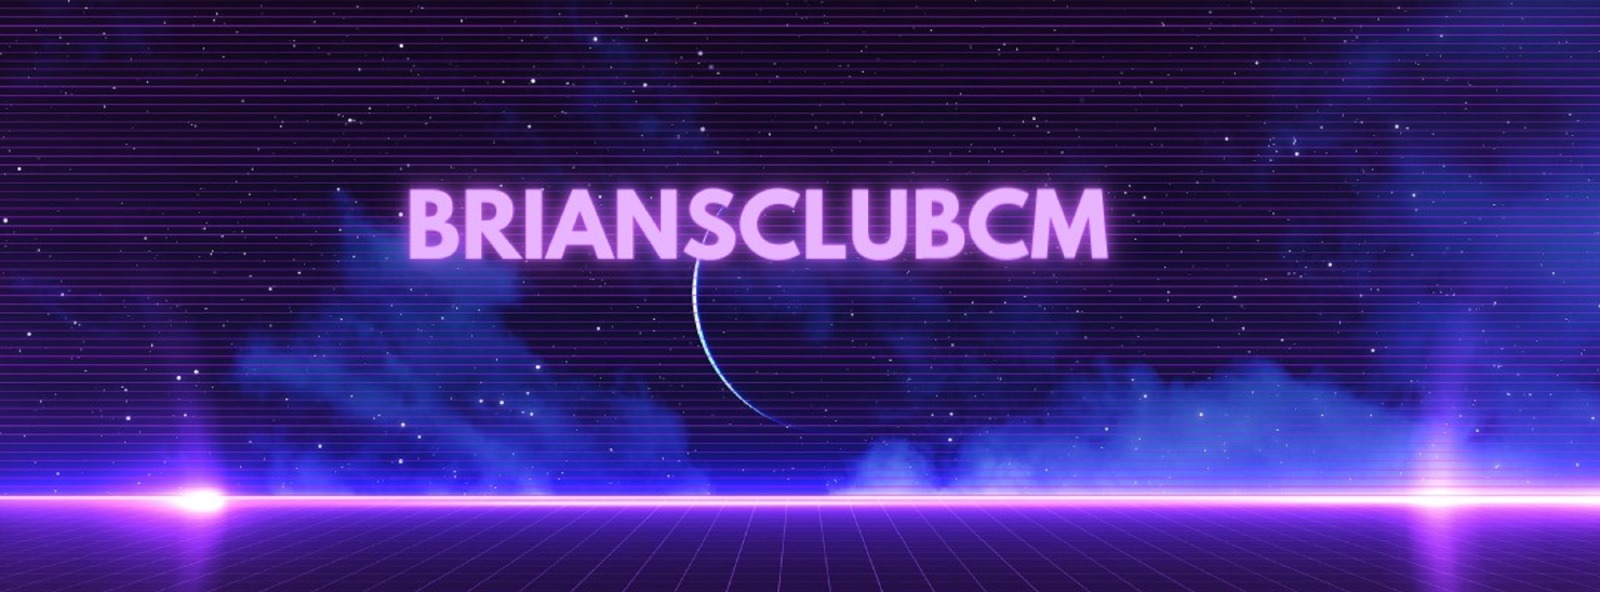 brians club